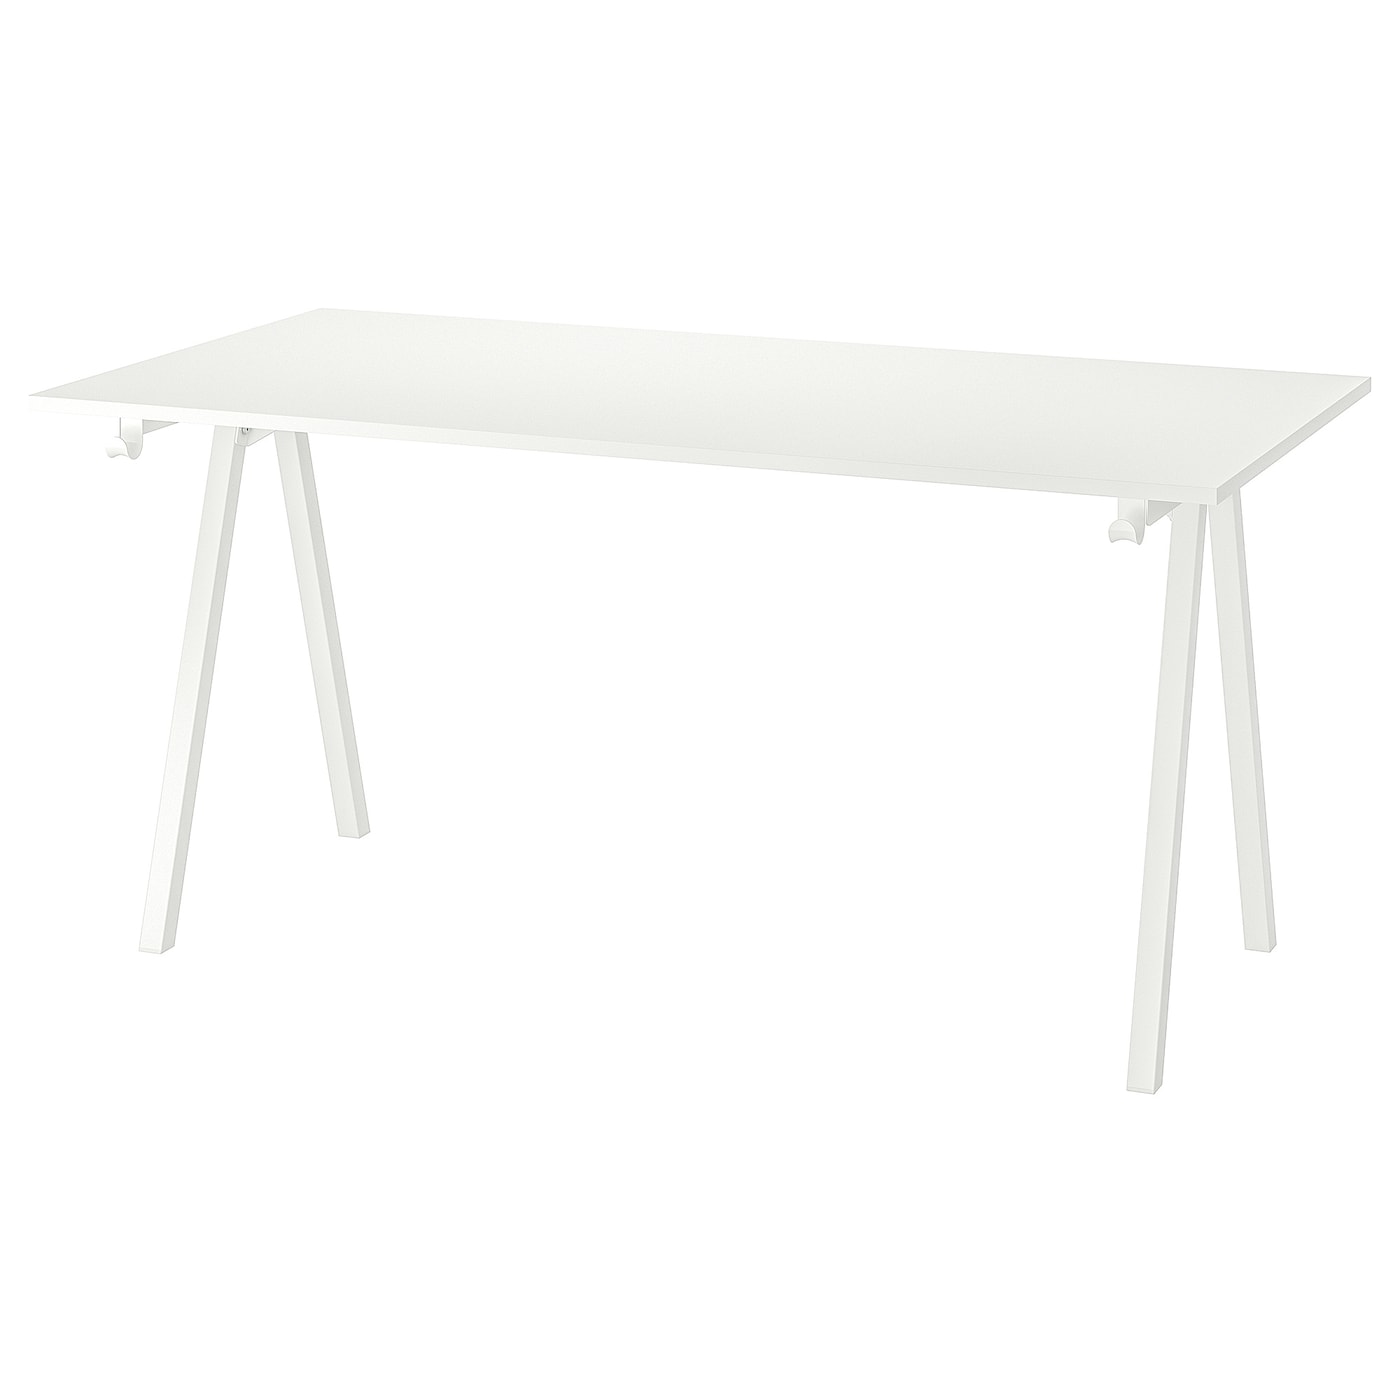 Письменный стол - IKEA TROTTEN, 160х80 см, белый, ТРОТТЕН ИКЕА